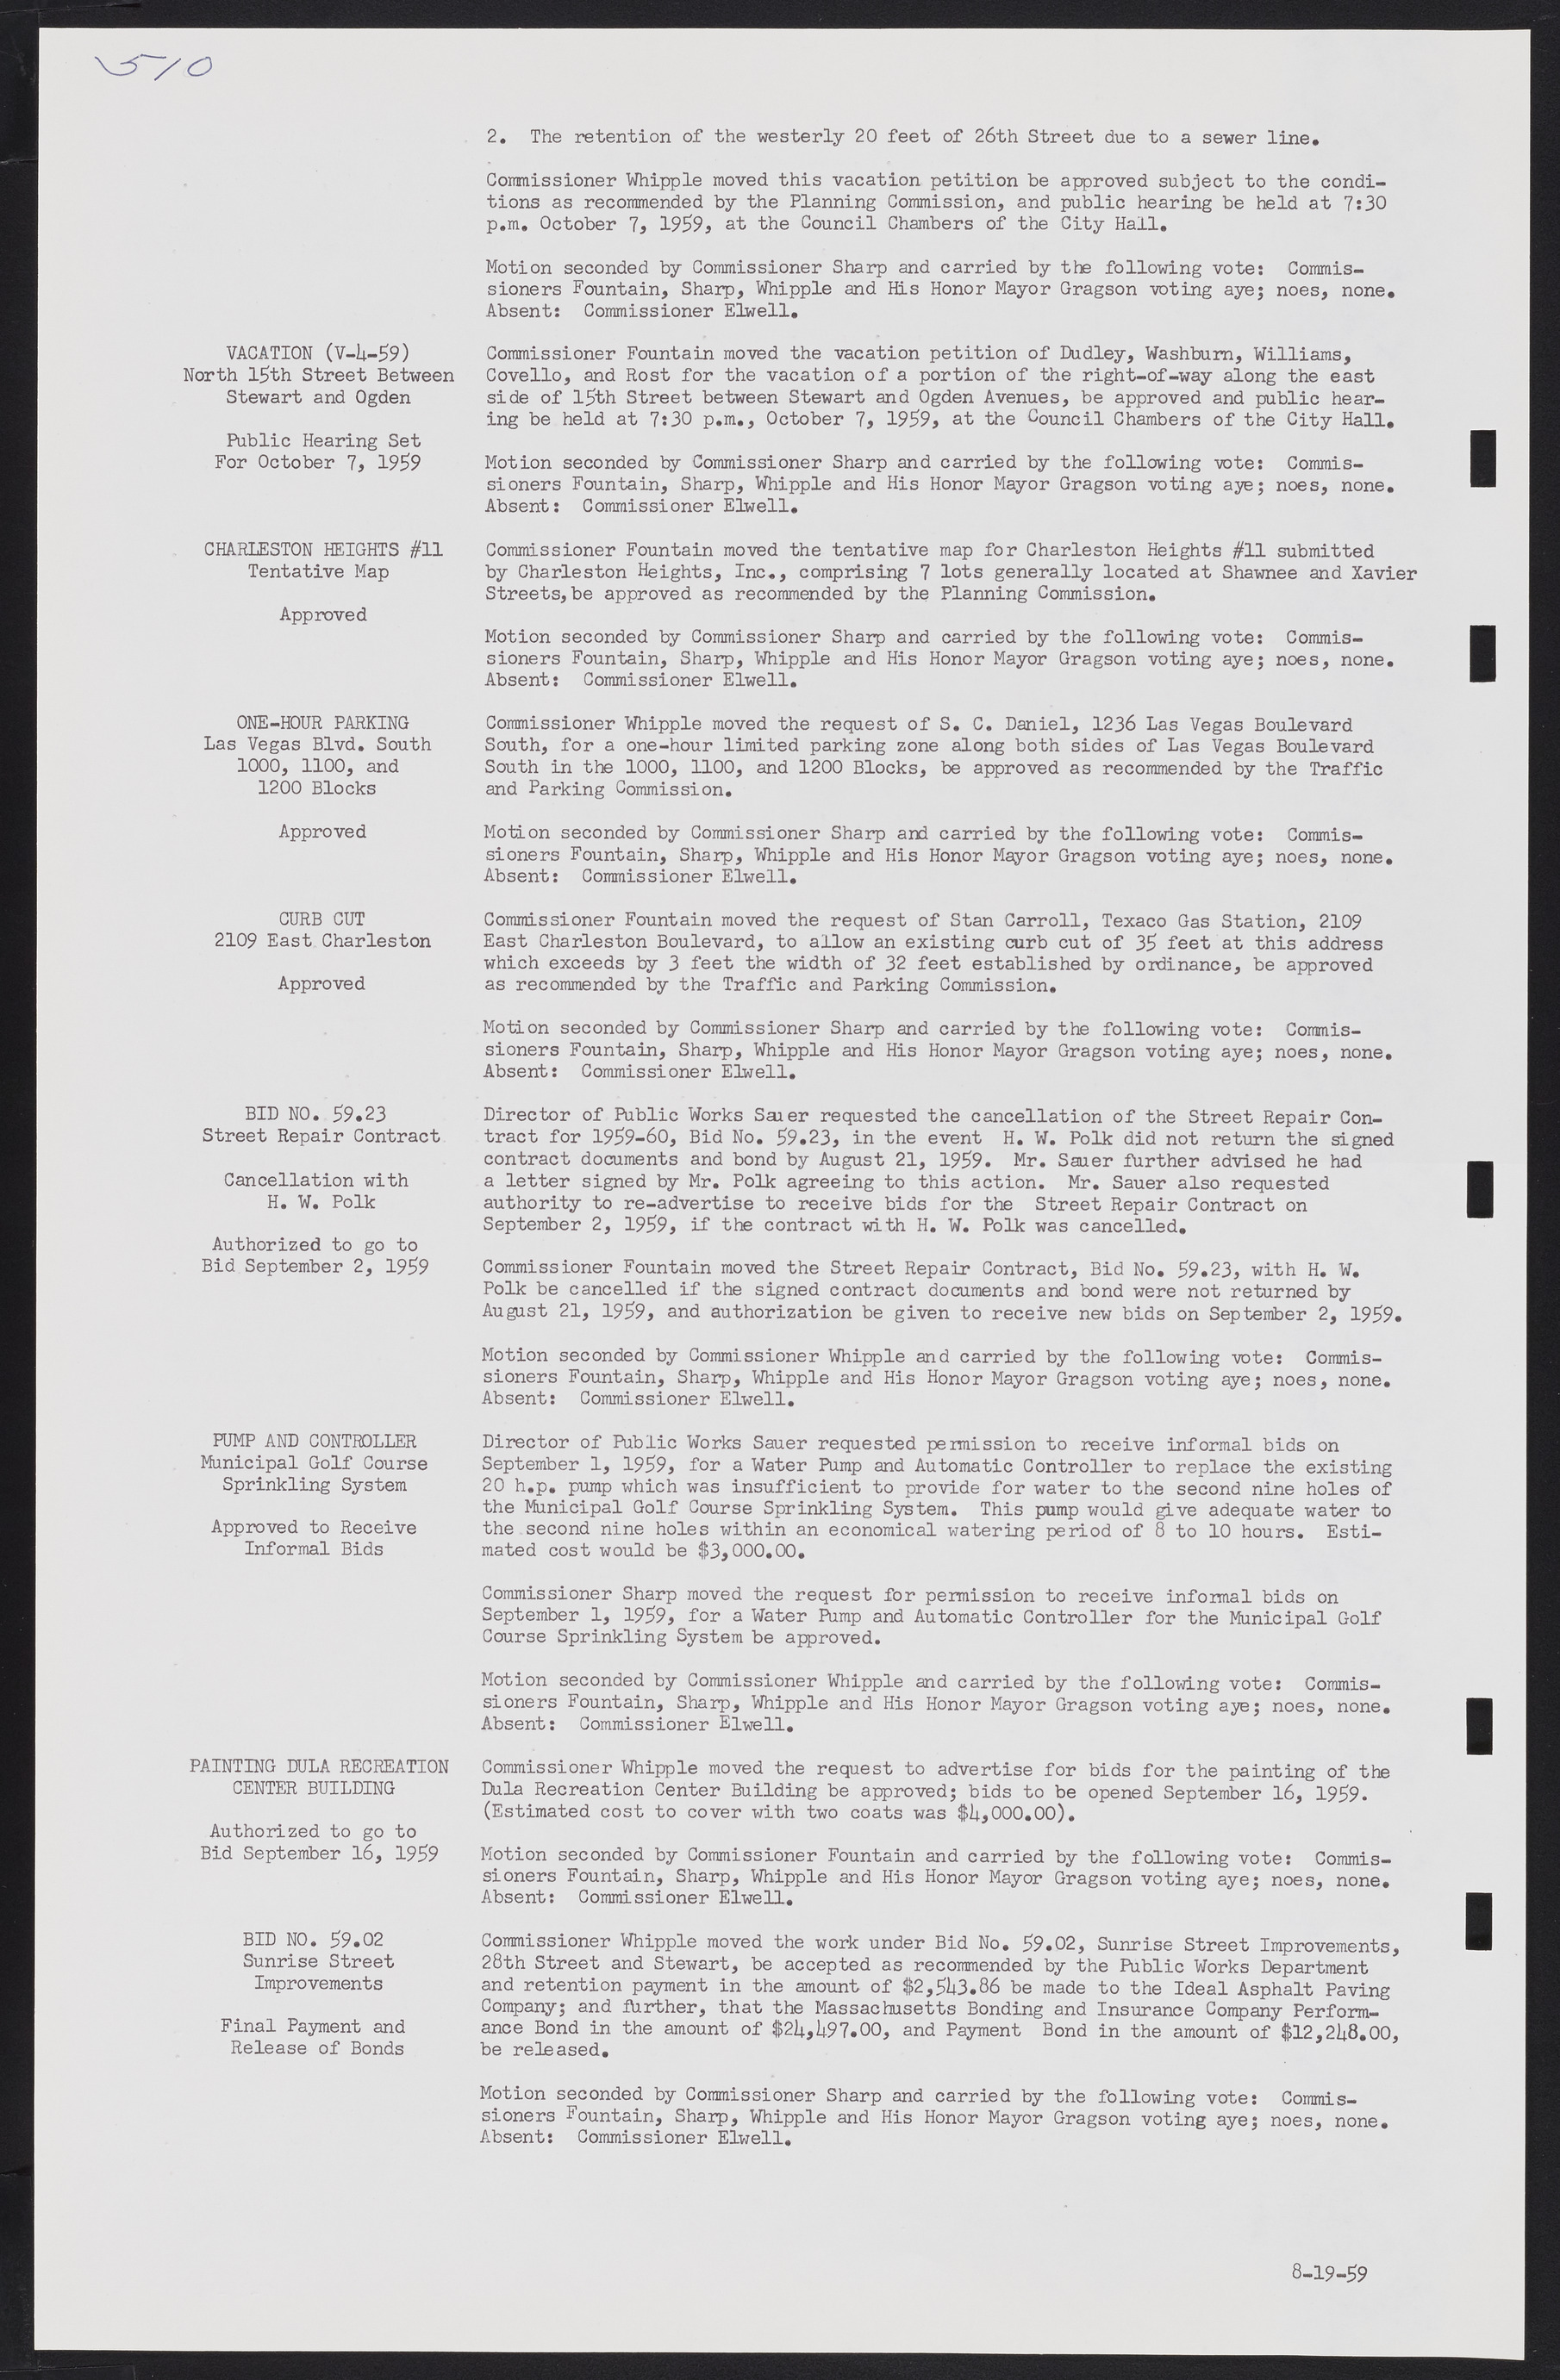 Las Vegas City Commission Minutes, November 20, 1957 to December 2, 1959, lvc000011-546